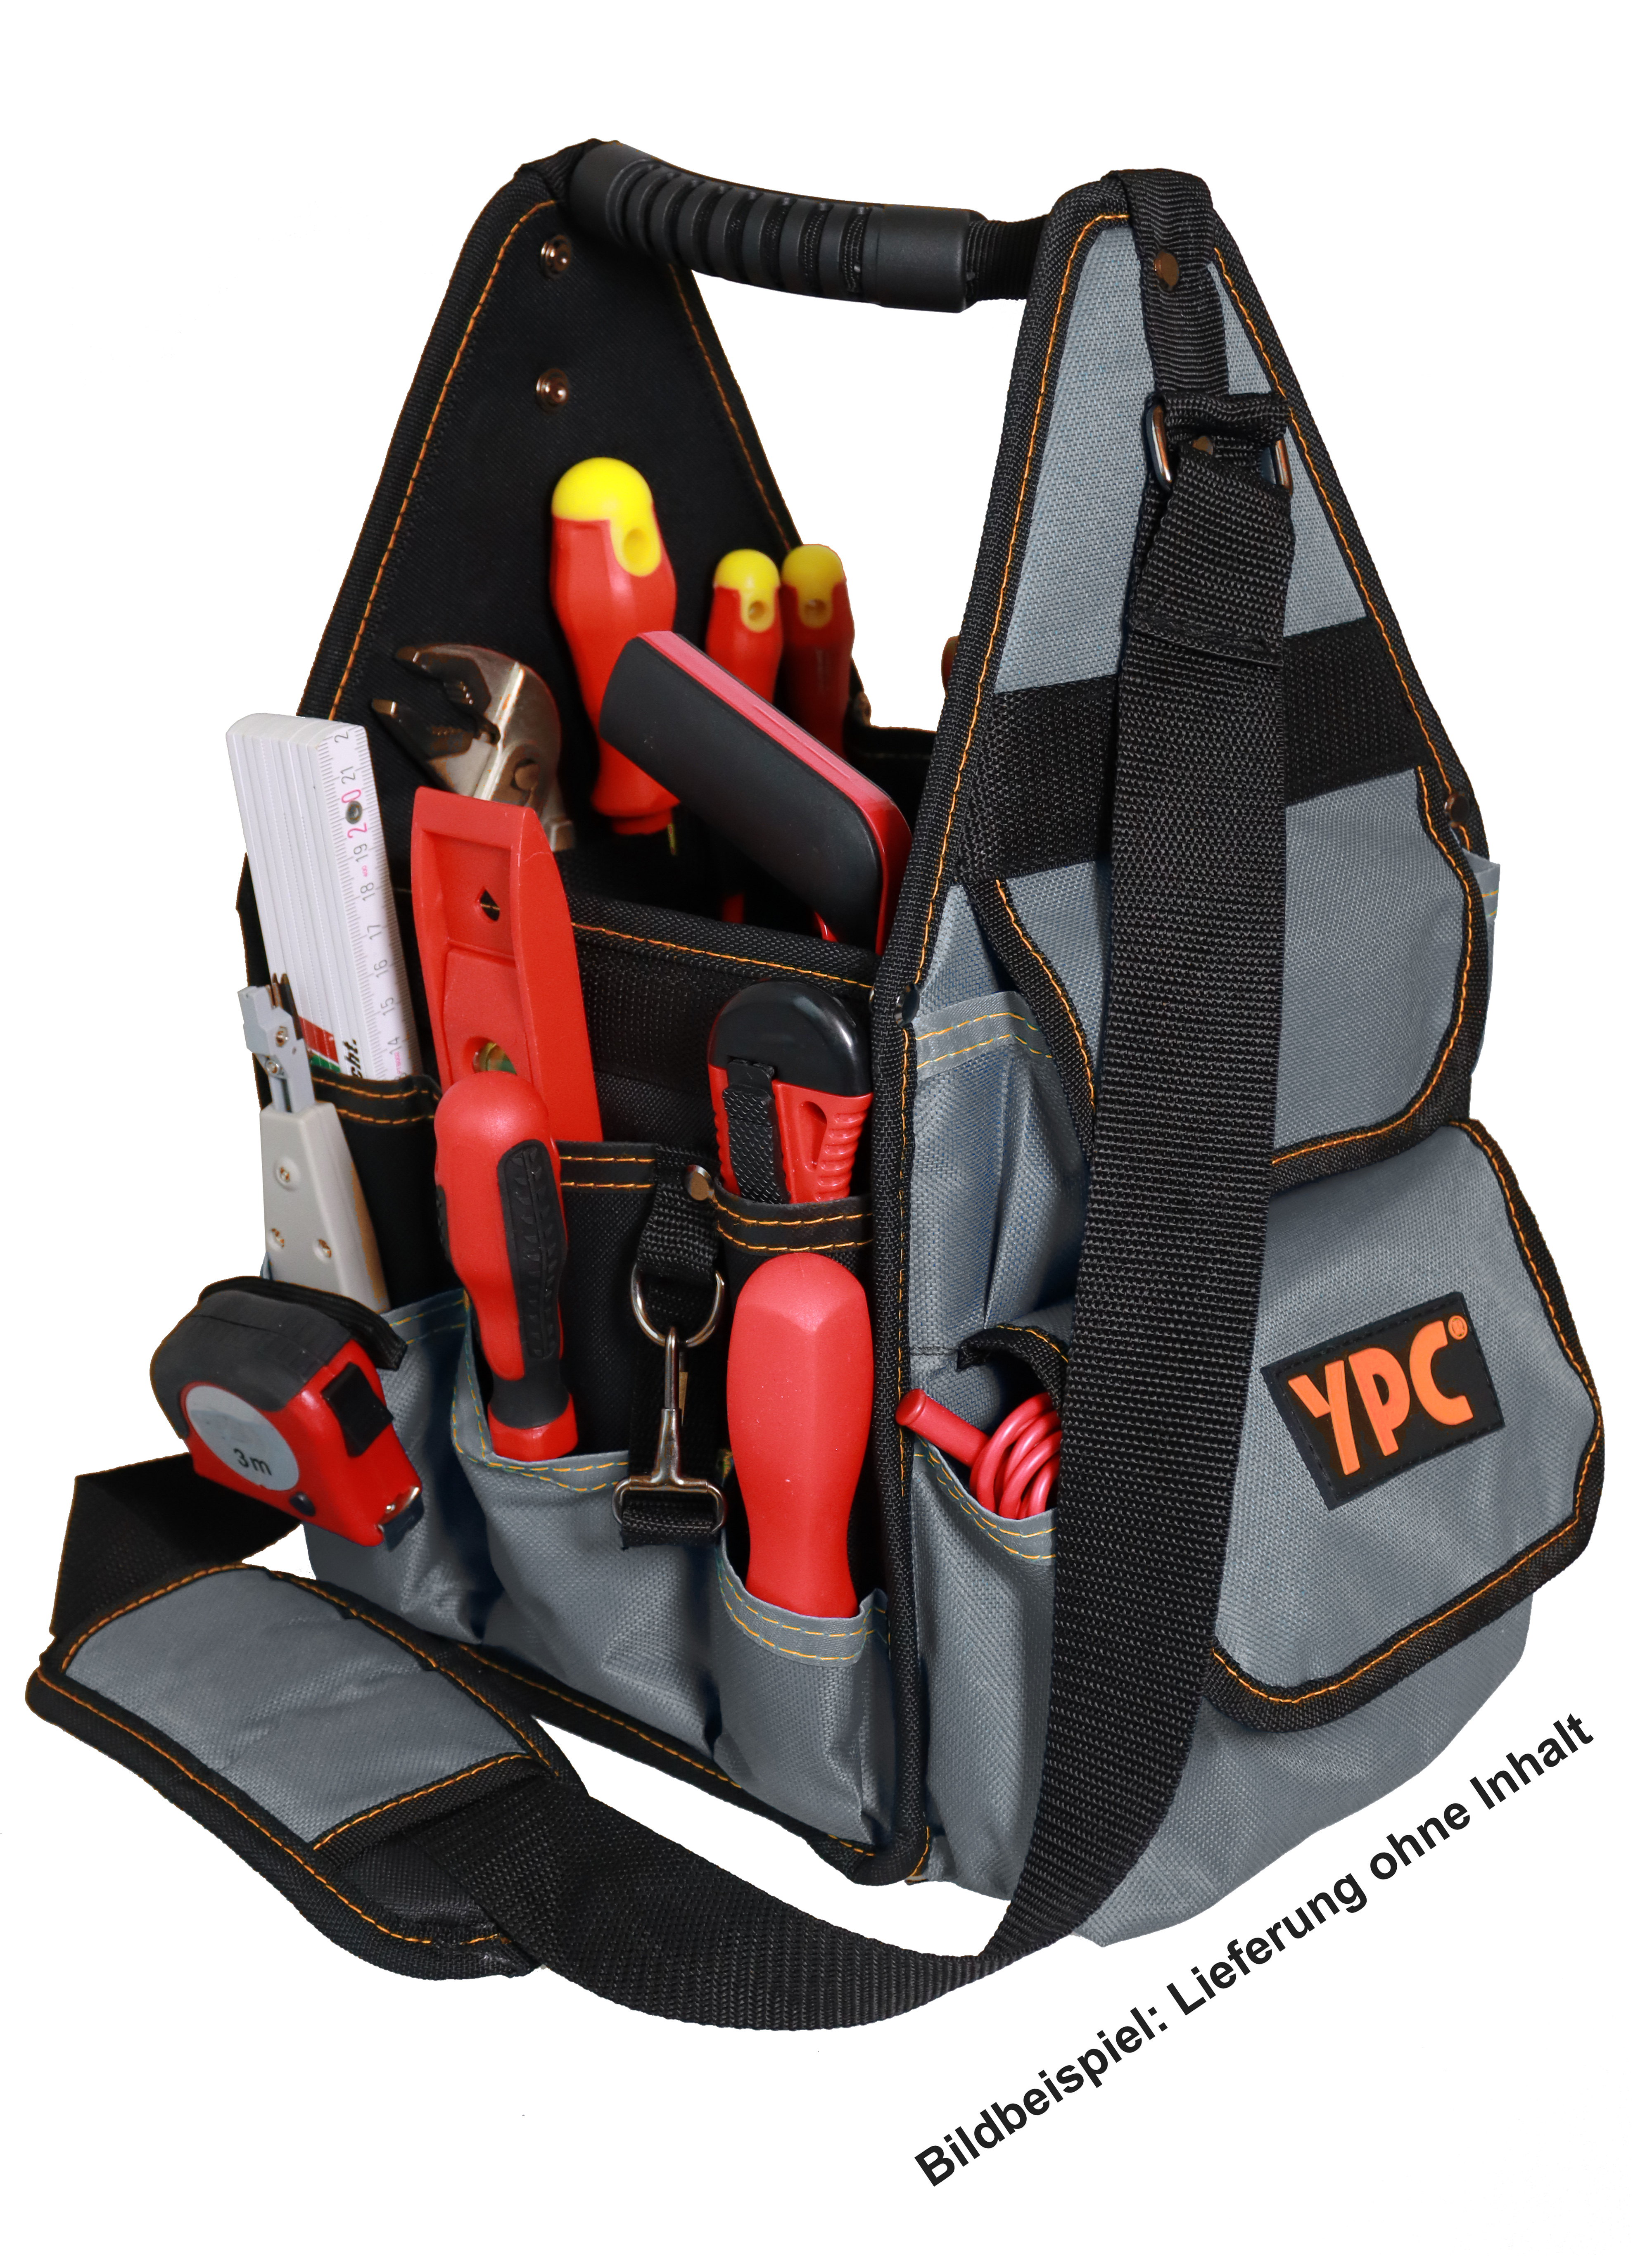 "Henchman" tool basket L, grey-black, 46x23x23cm, 10 kg load capacity